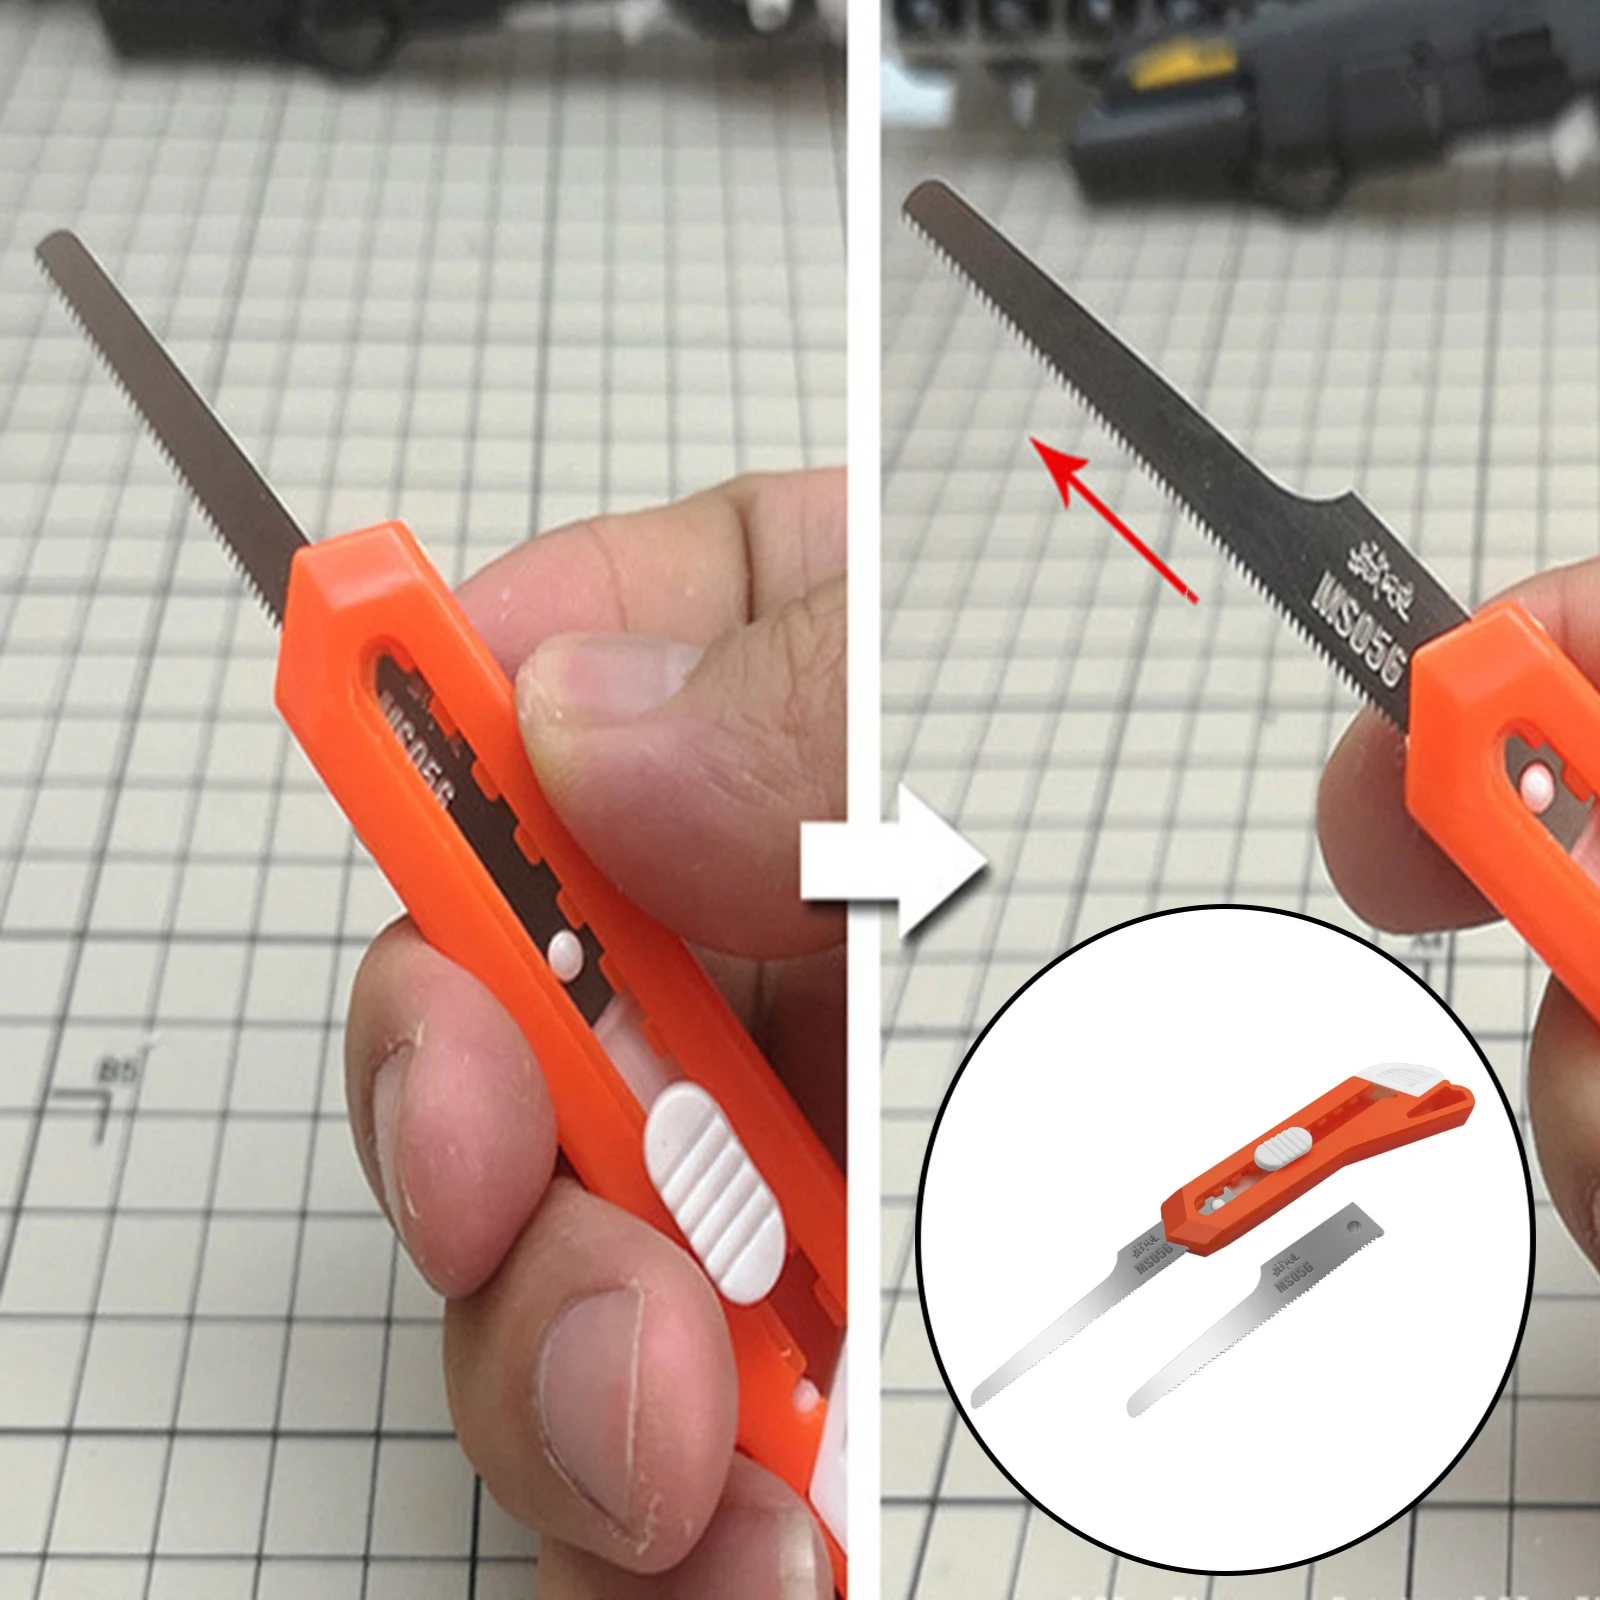 Multifunction Hobby Model Mini Hand Saw Knife Blades Cutter Kit 2 in 1 DIY Craft Model Hand Saw Hacksaw